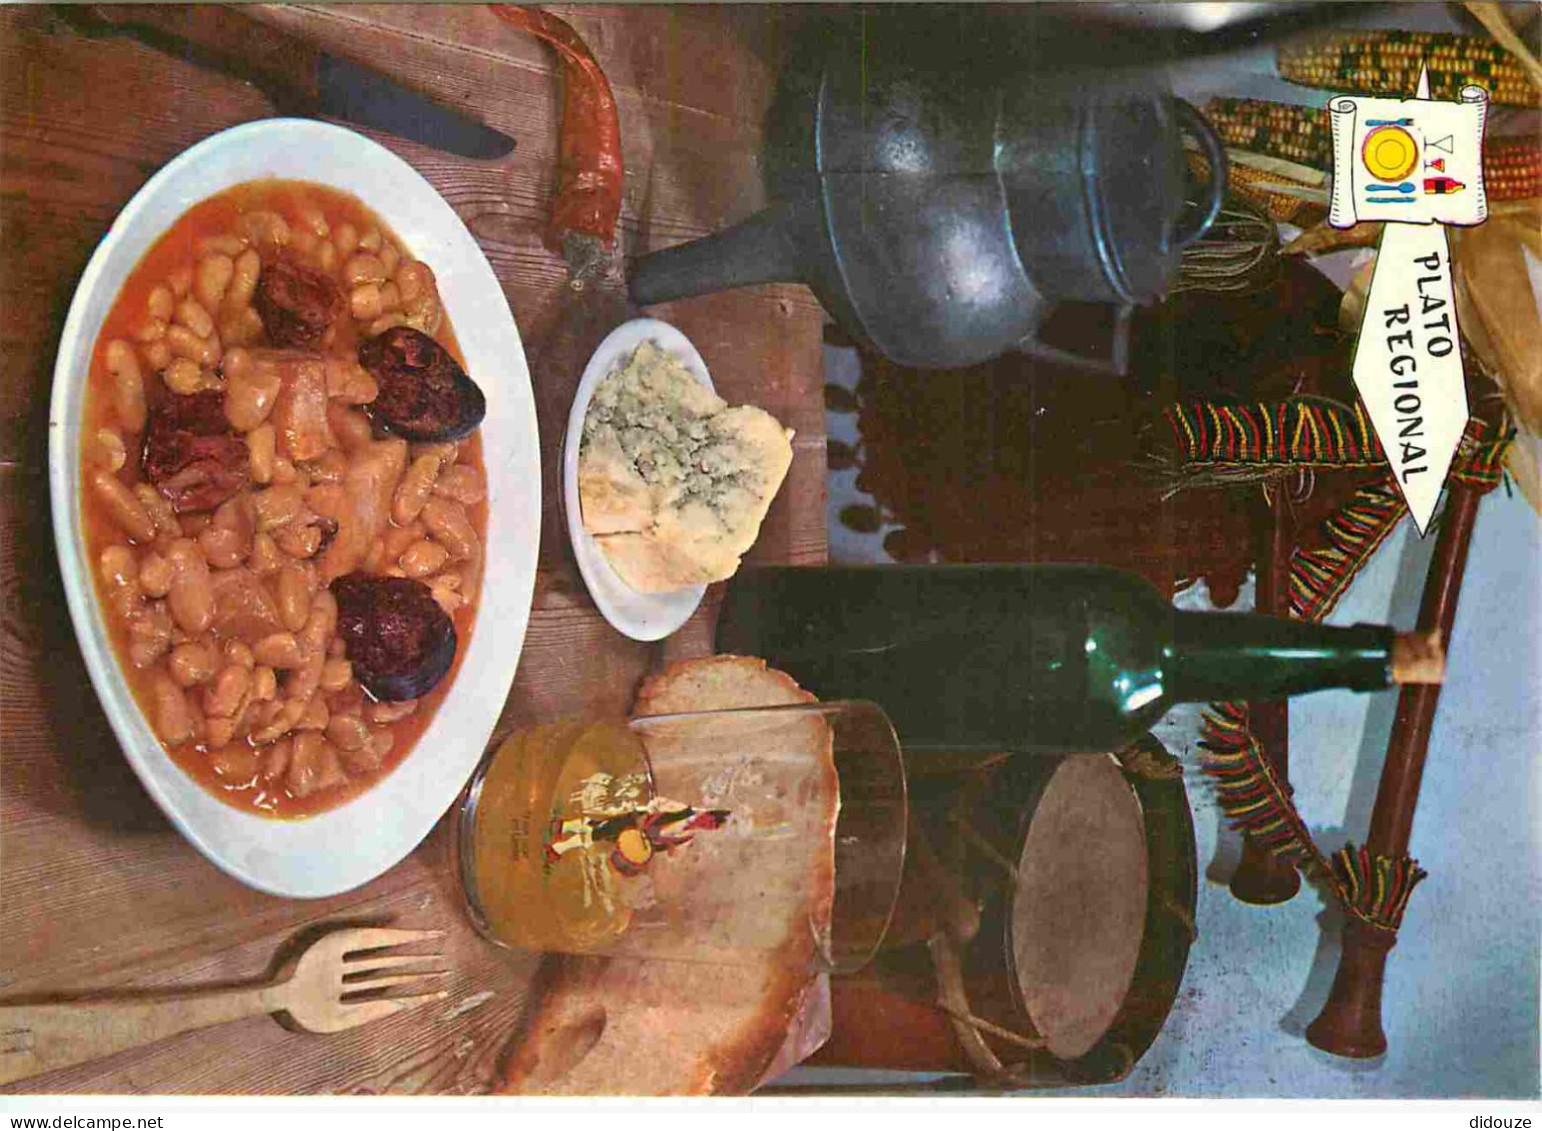 Recettes De Cuisine - Fabada Asturiana - Gastronomie - CPM - Voir Scans Recto-Verso - Recipes (cooking)